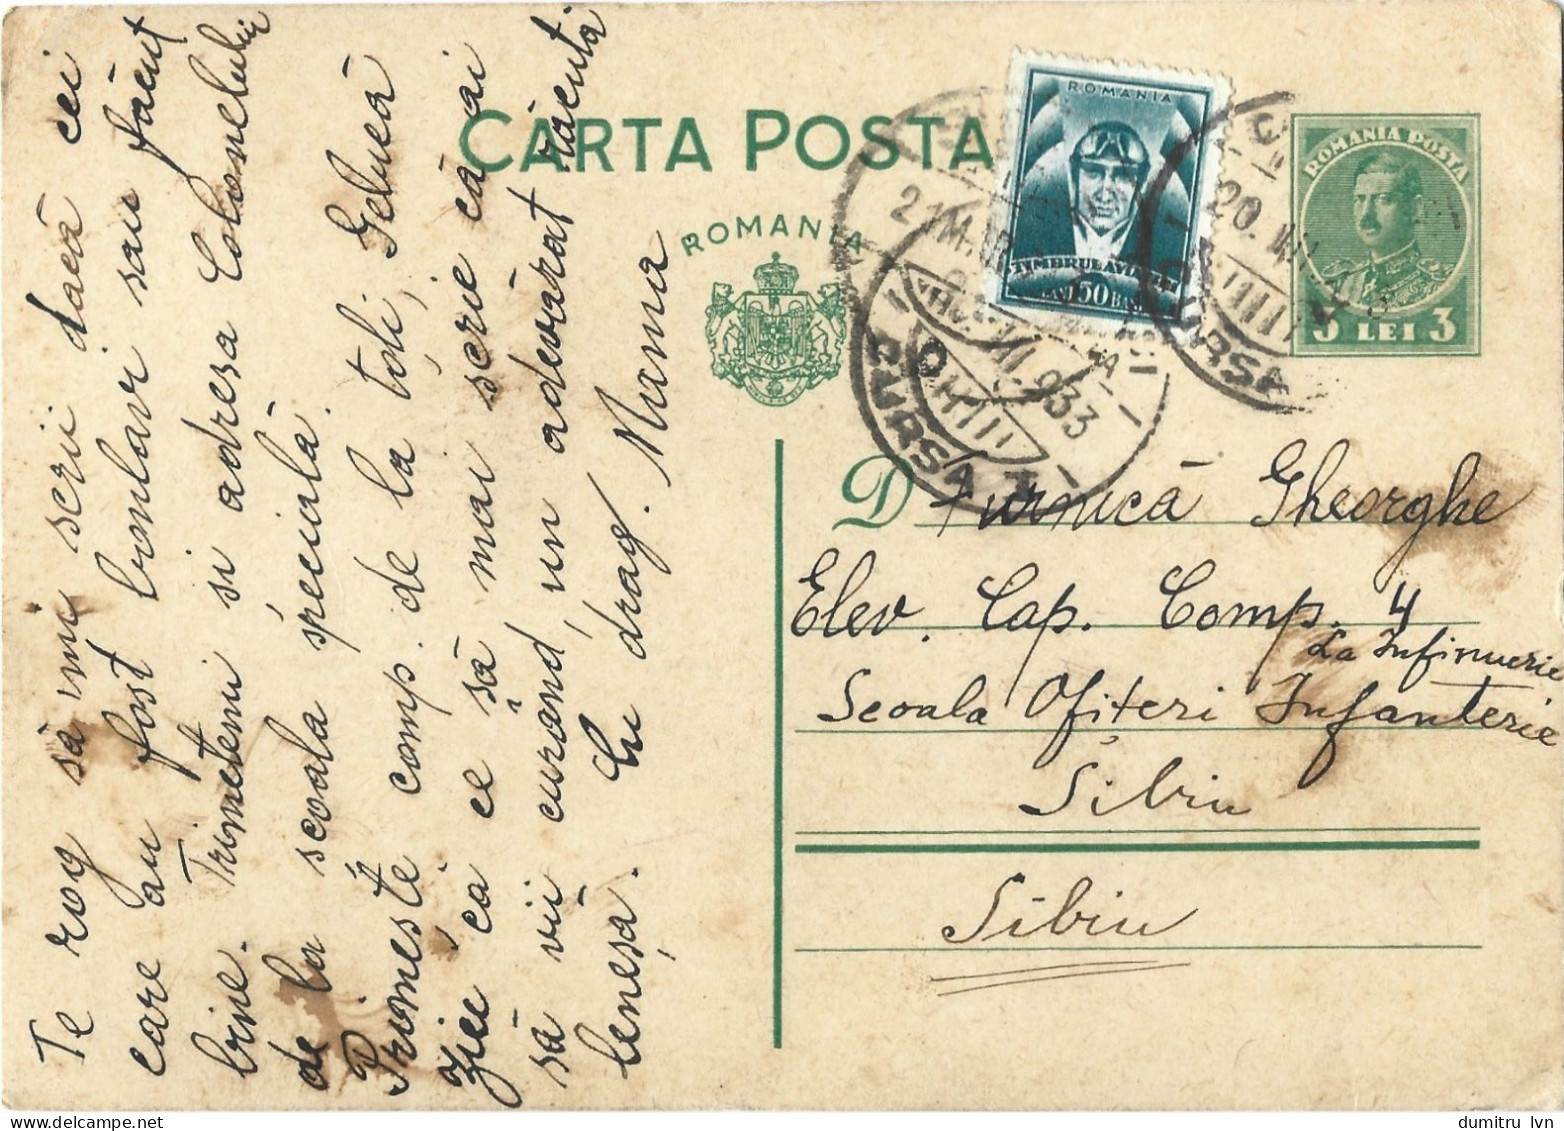 ROMANIA 1933 POSTCARD STATIONERY - World War 2 Letters